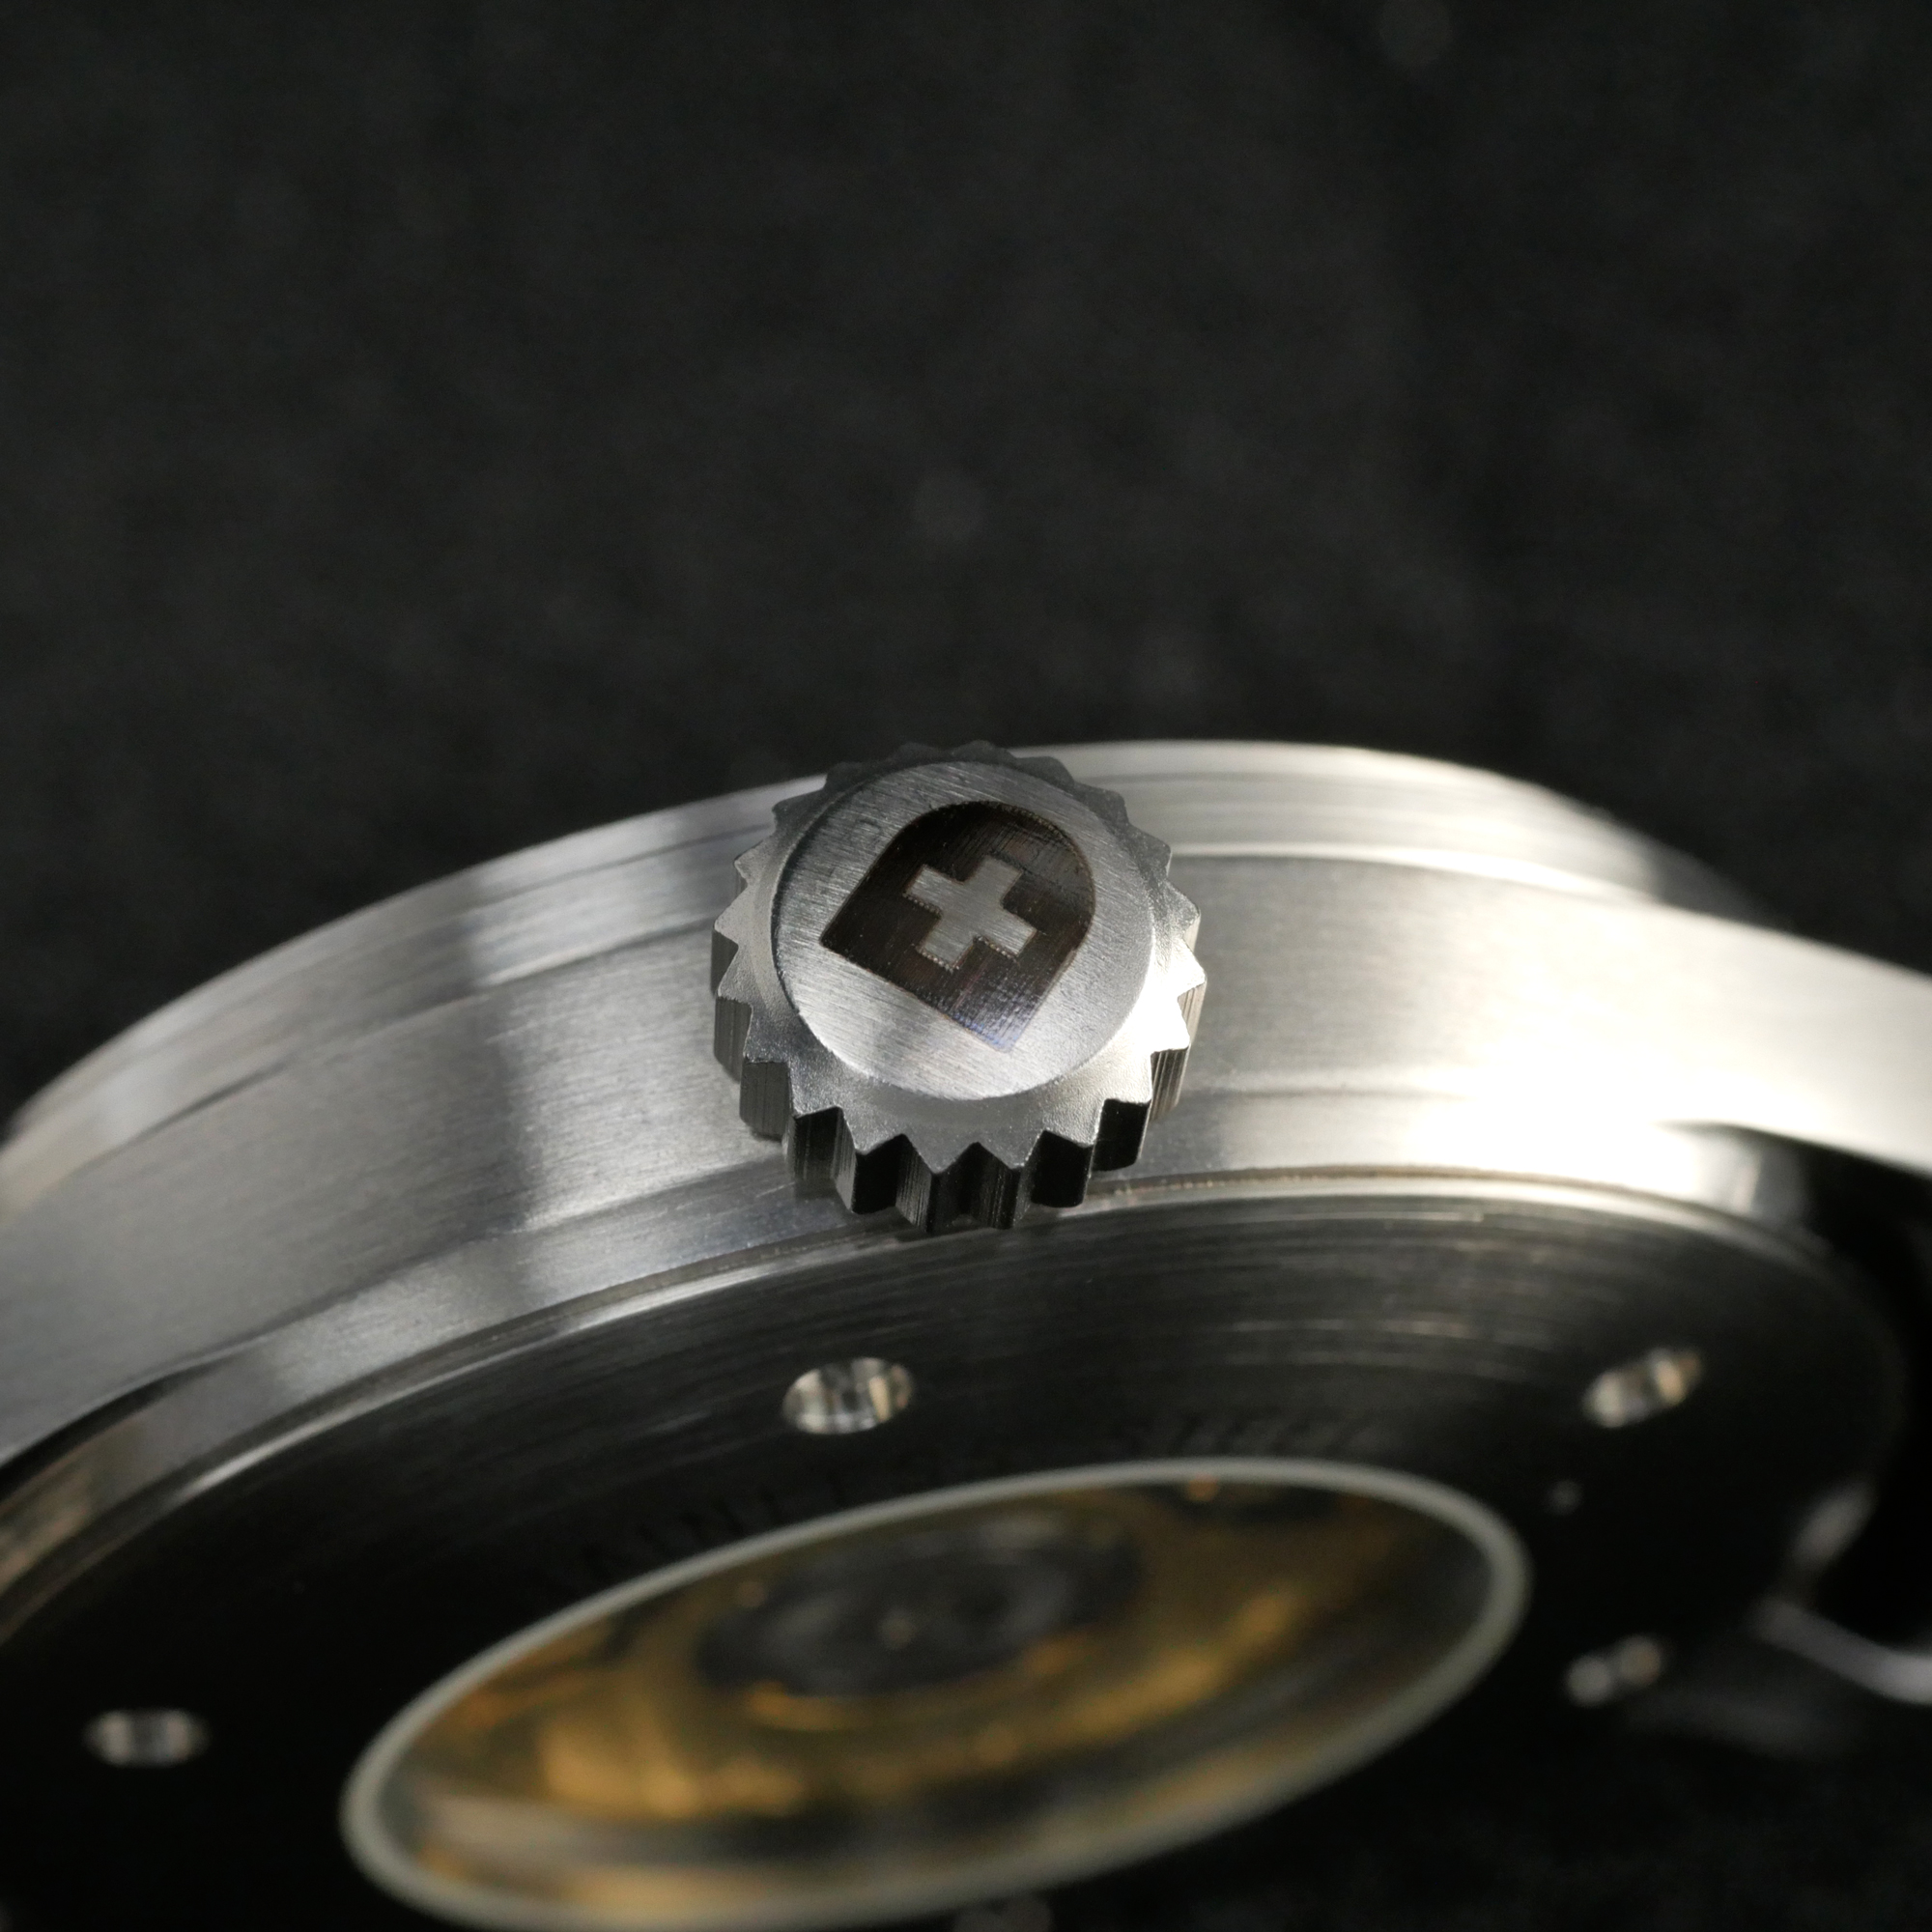 Zeno-Watch Basel OS Pilot GMT (Dual Time) Swiss Men's Watch 47.5mm 3ATM 8563-a1